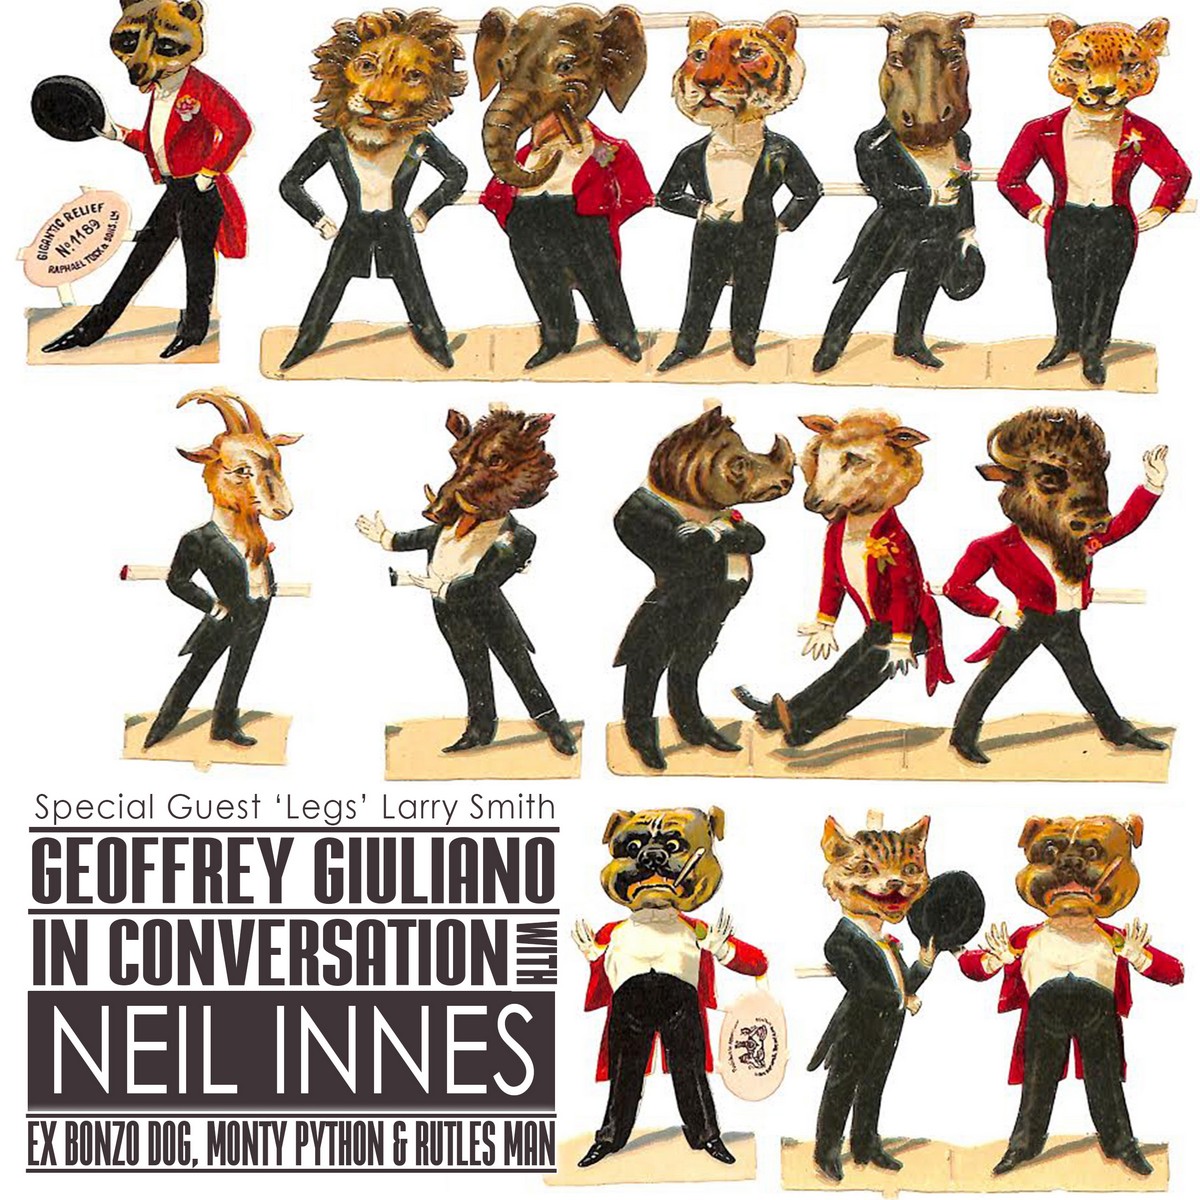 Geoffrey Giuliano in Conversation with Neil Innes – Ex Bonzo Dog